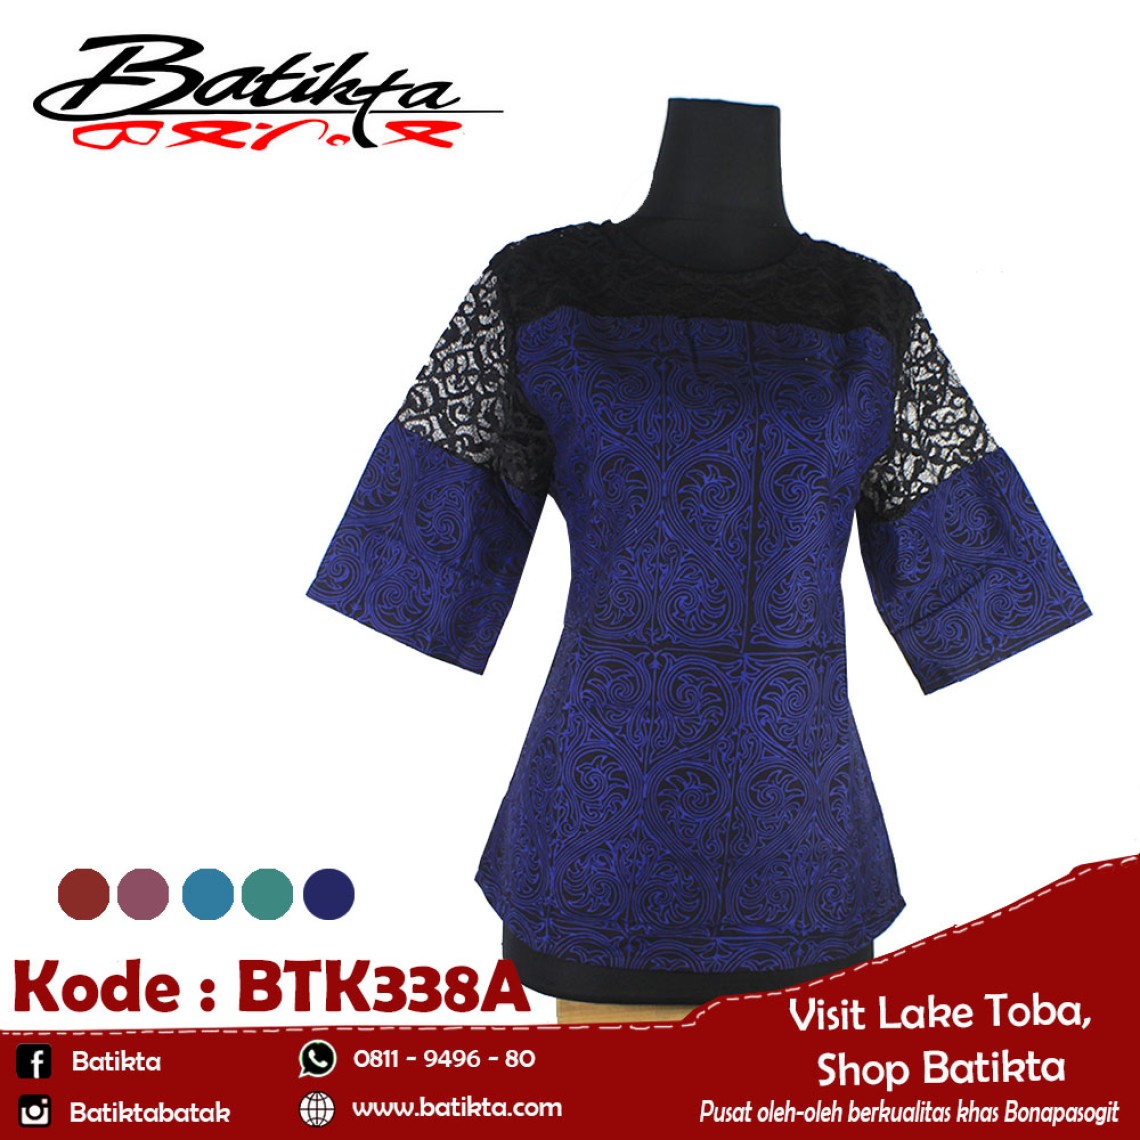 BTK338A Blus Batik Motif Gorga Warna Biru Tua Putih Hitam profile picture